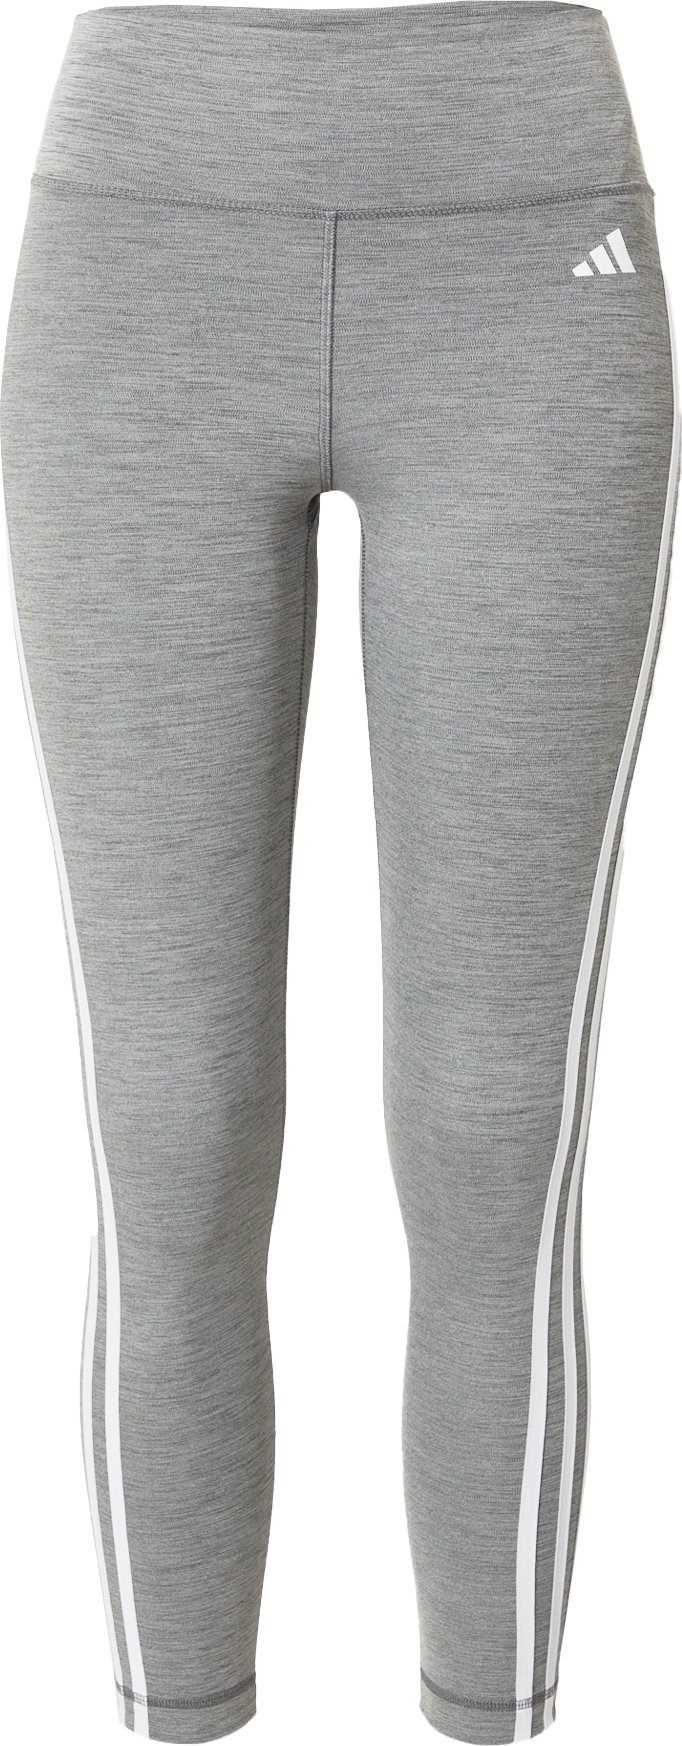 ADIDAS PERFORMANCE Sportovní kalhoty šedý melír / bílá